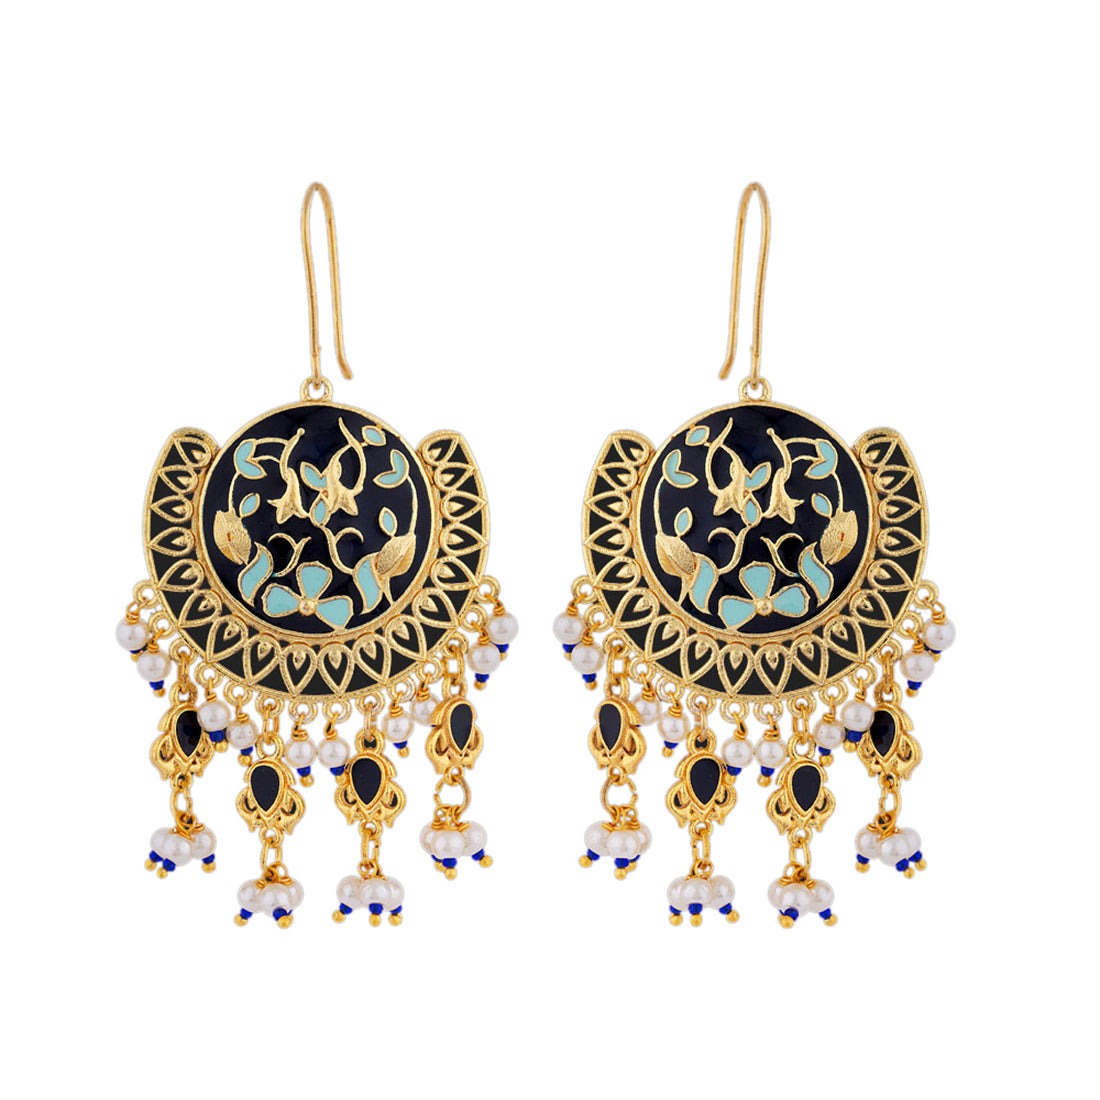 Ad stone earrings silver polish chandbali - Swarnakshi Jewelry